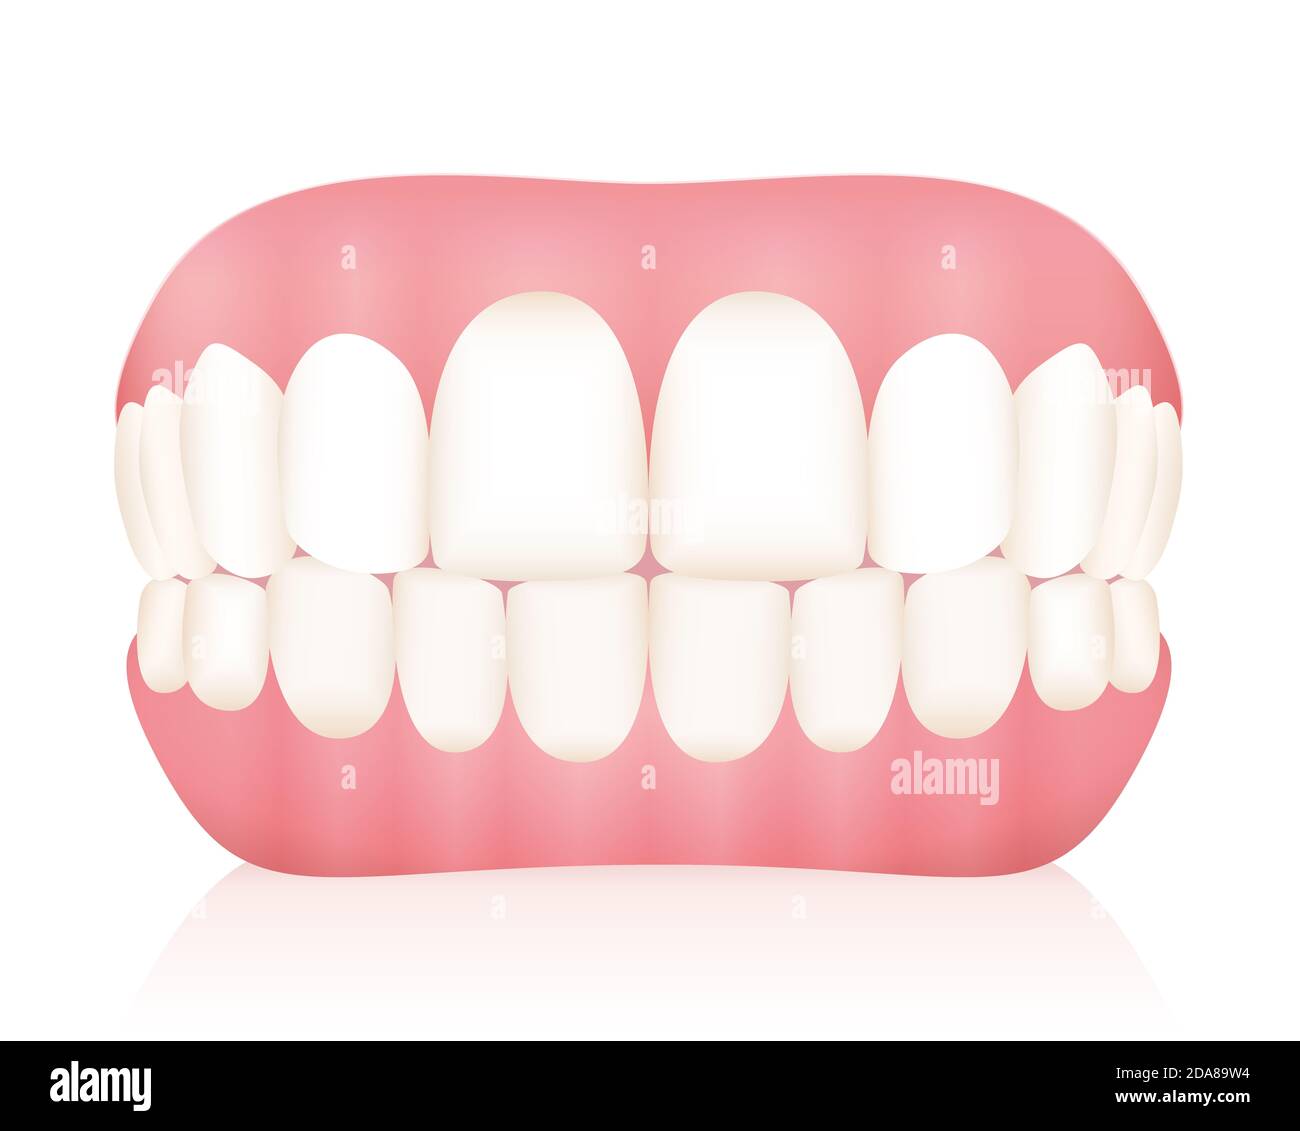 Dentures. False teeth - illustration on white background. Stock Photo